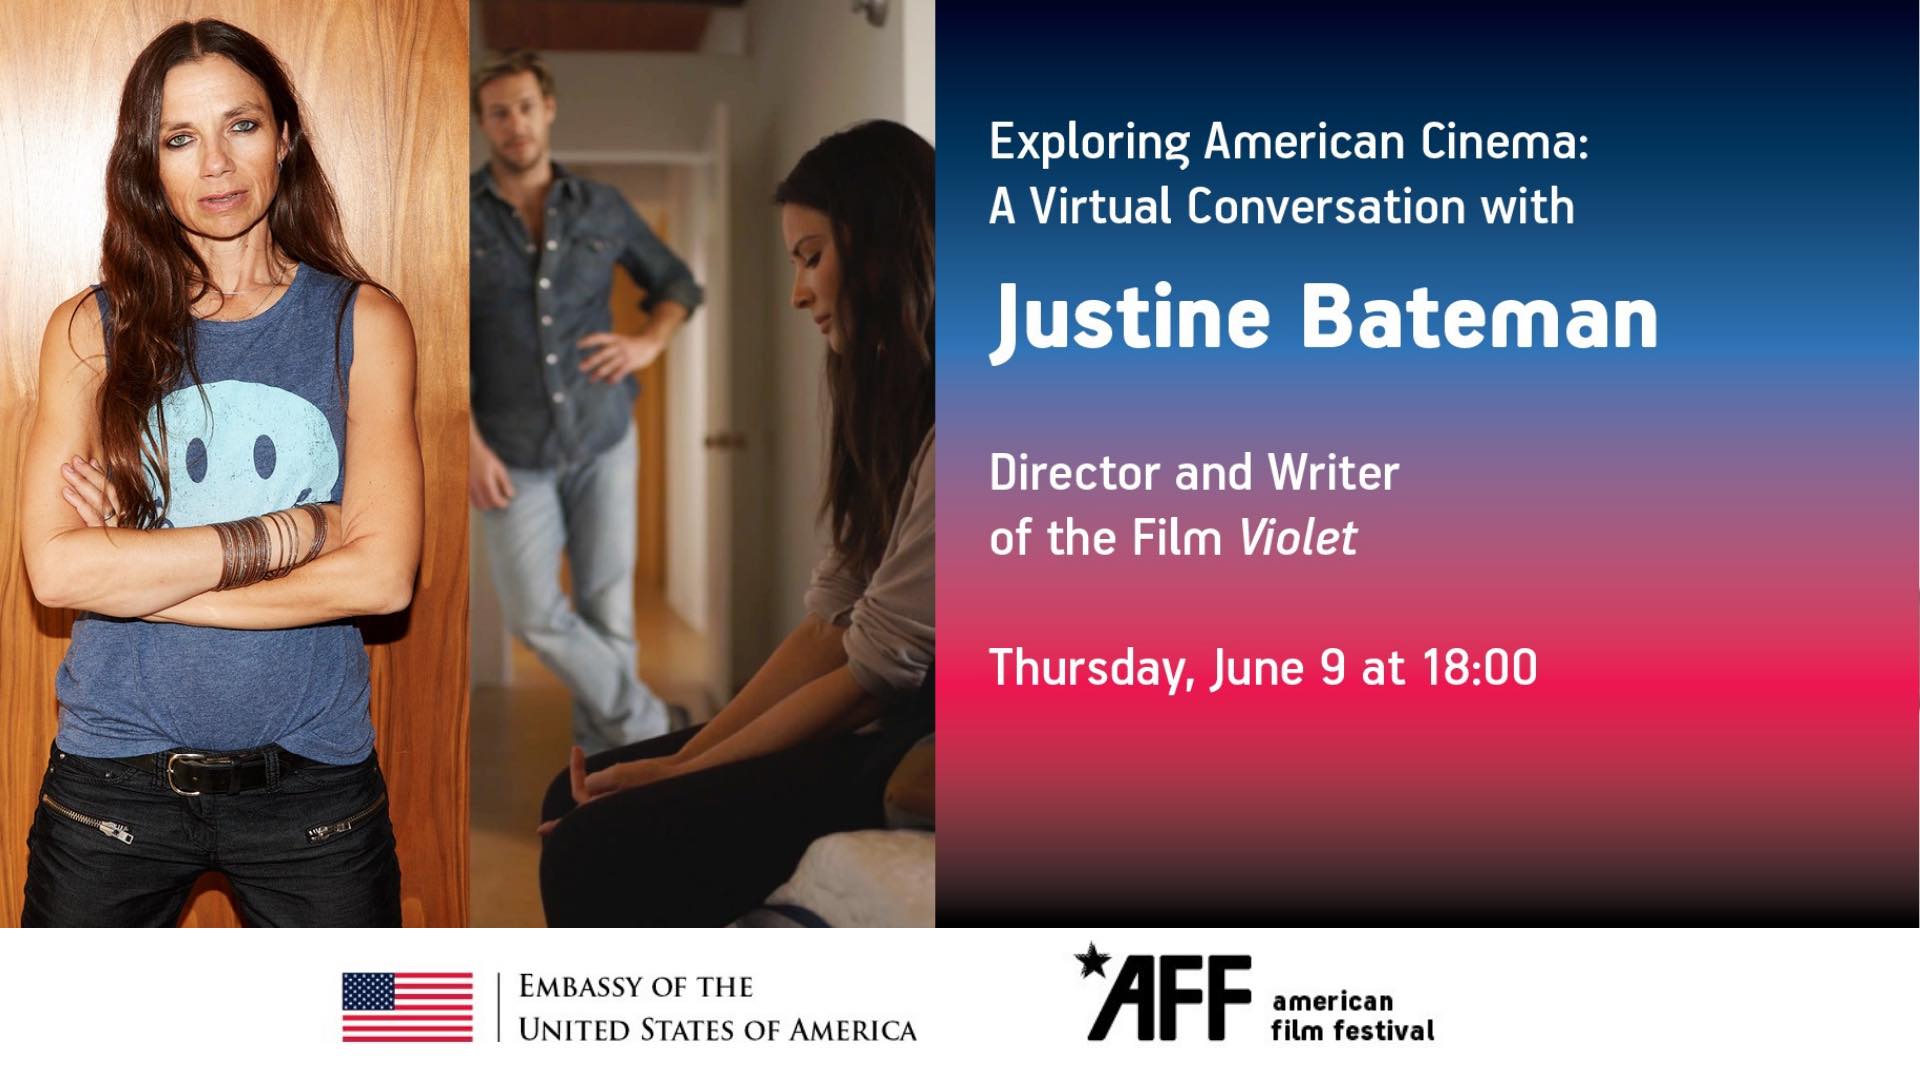 Justine Bateman gościem cyklu "Exploring American Cinema"